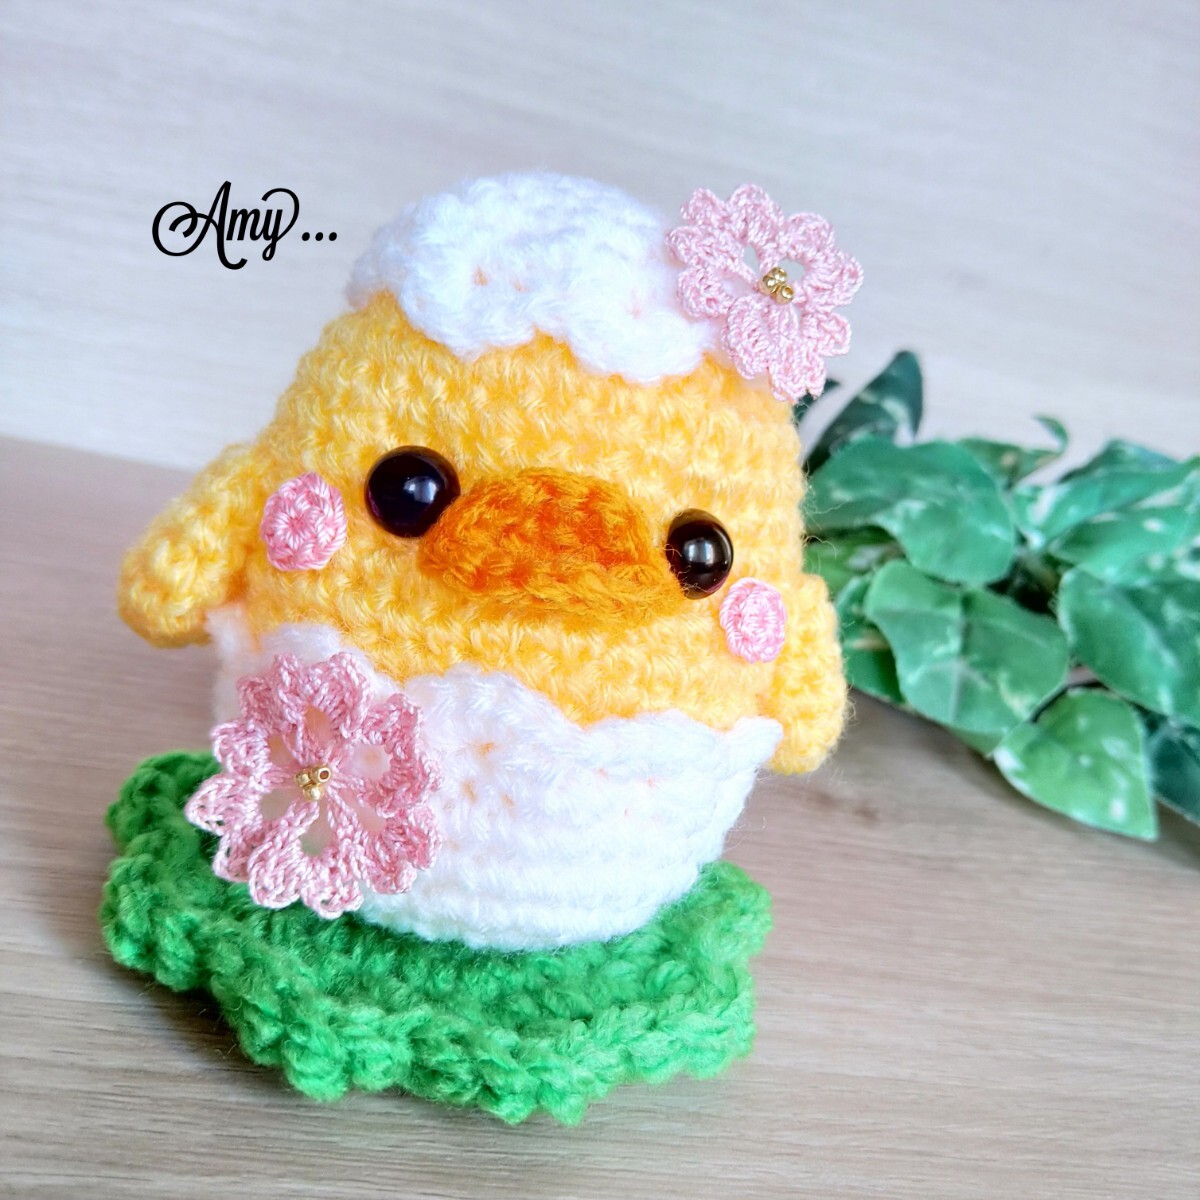 ■Amy... Amigurumi Sakura★Fluffy Chick♪ Free shipping Handmade♪, toy, game, stuffed toy, Amigurumi